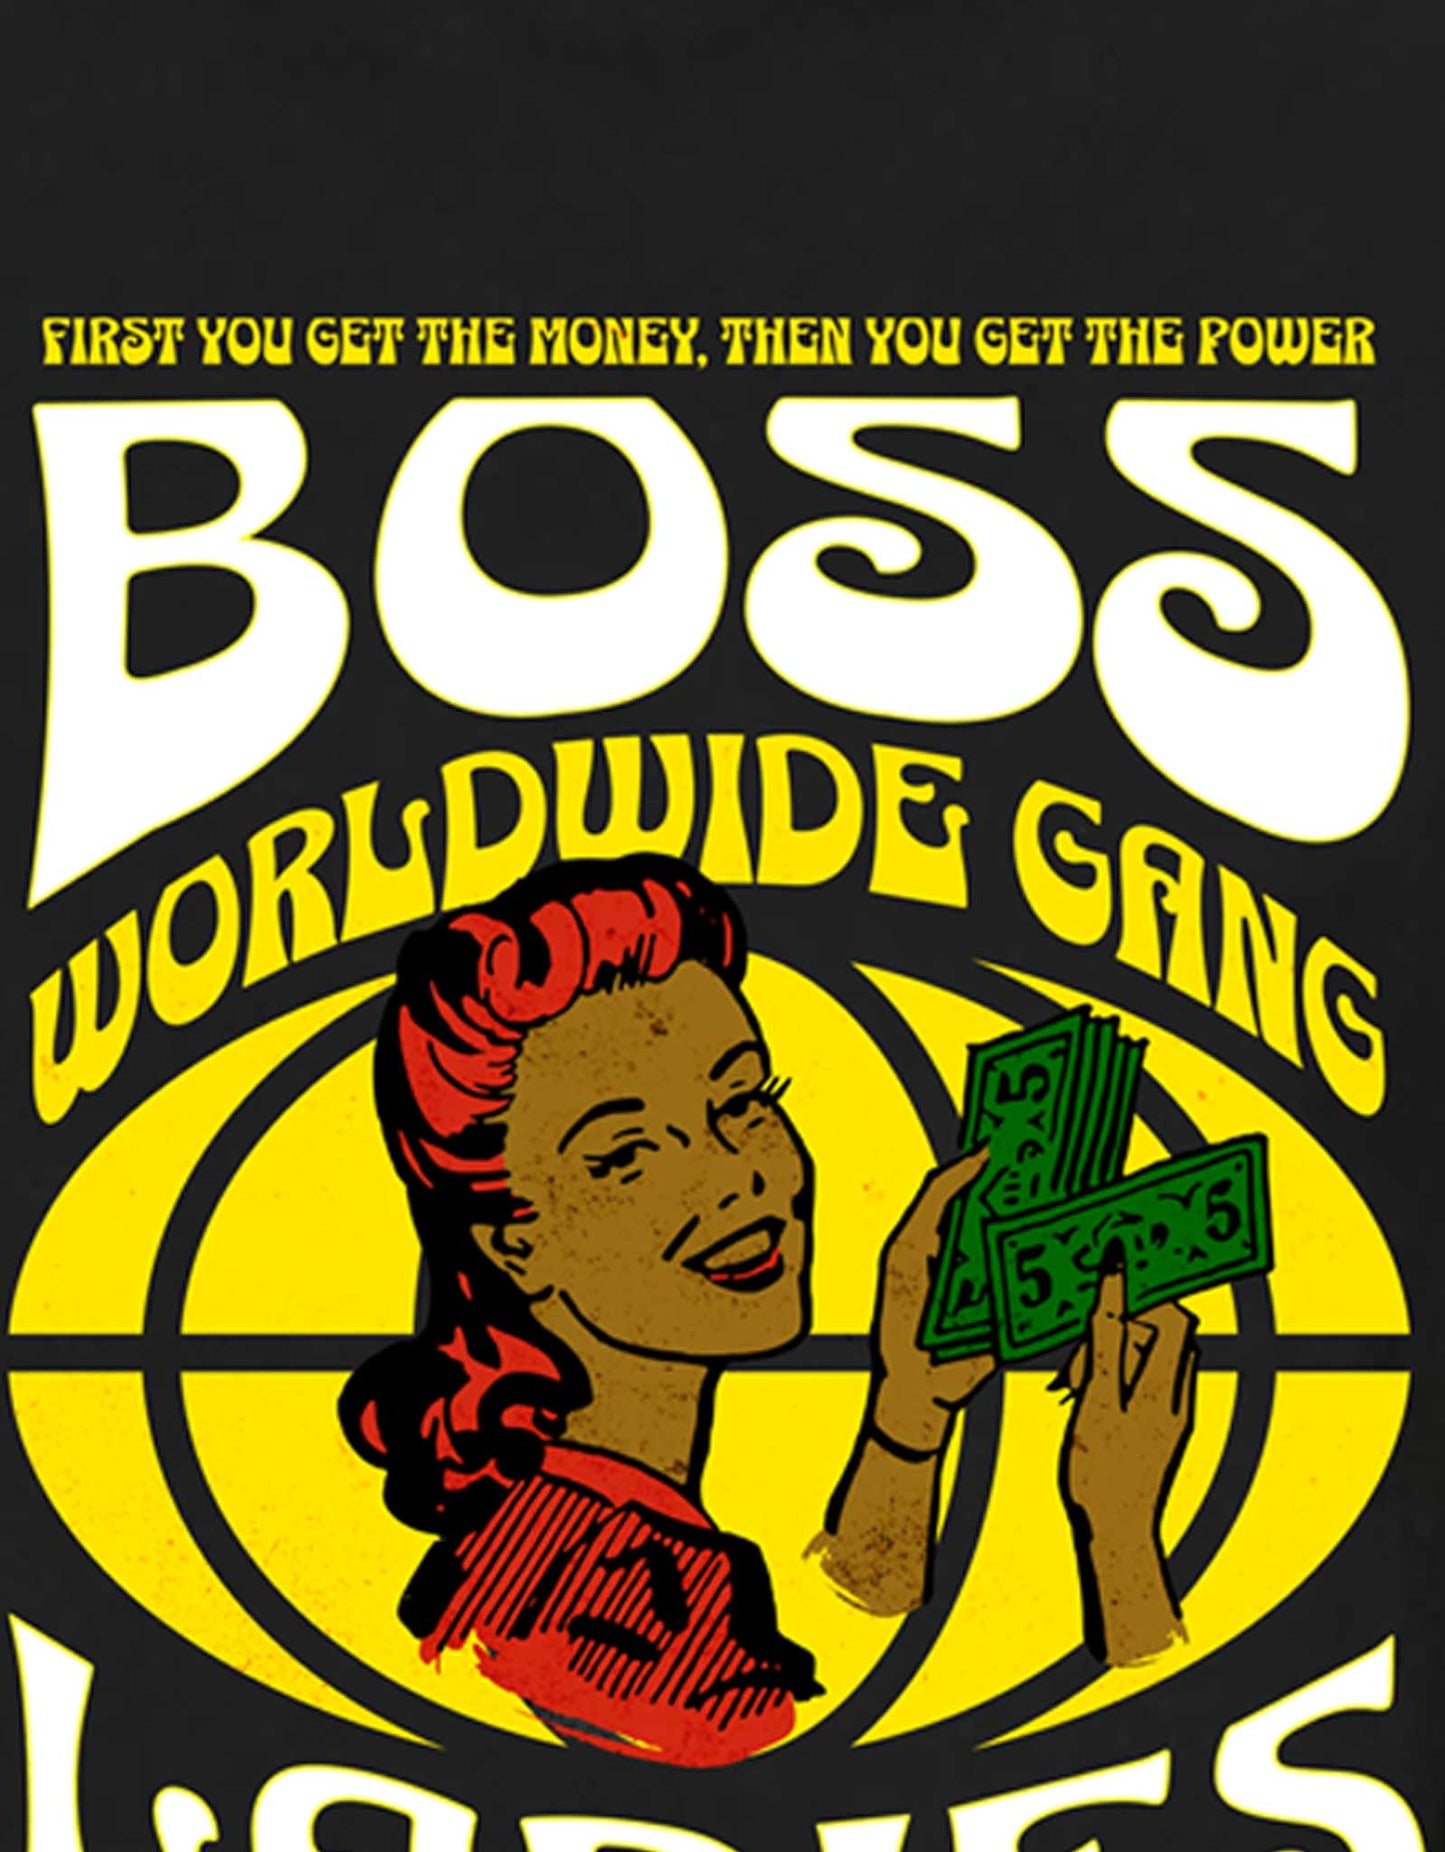 T-shirt Boss Ladies 'Power' - Lasourcedustyle